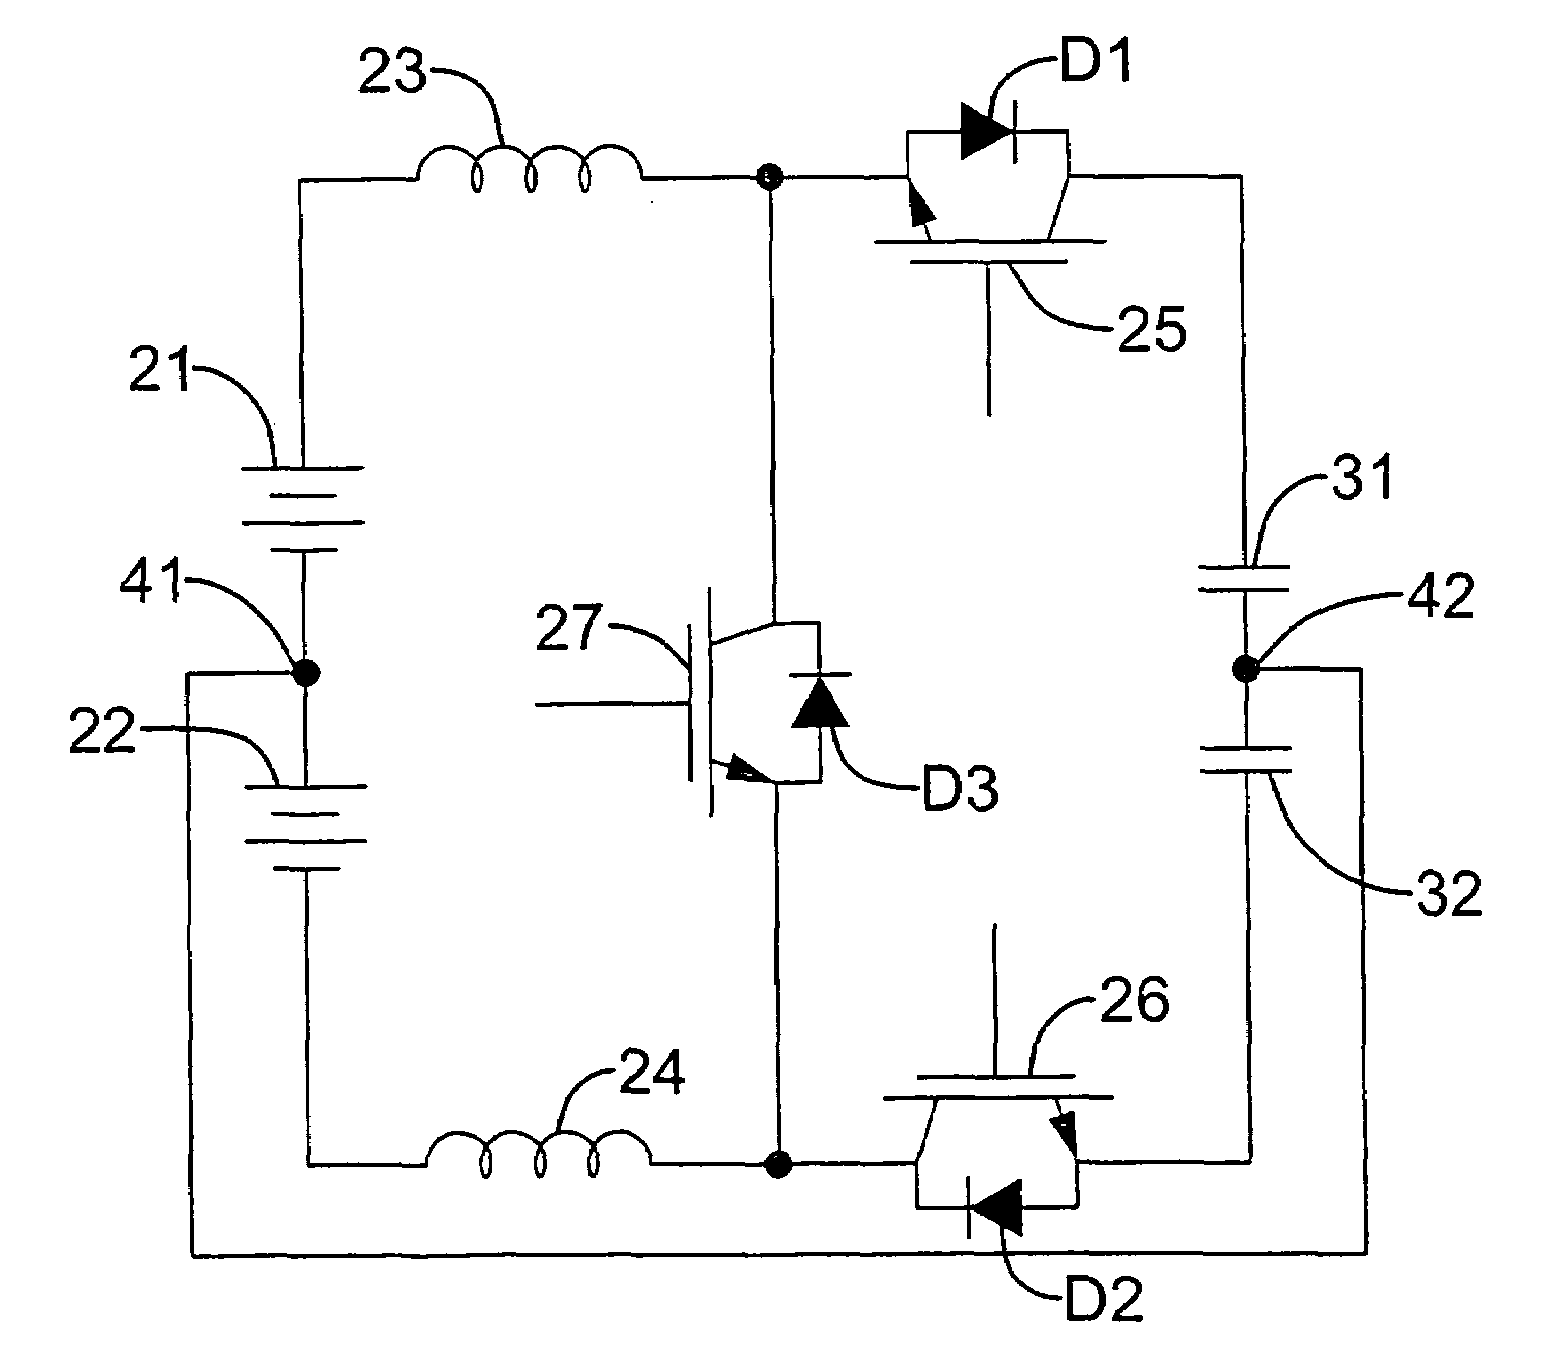 Bi-directional DC to DC power converter having a neutral terminal